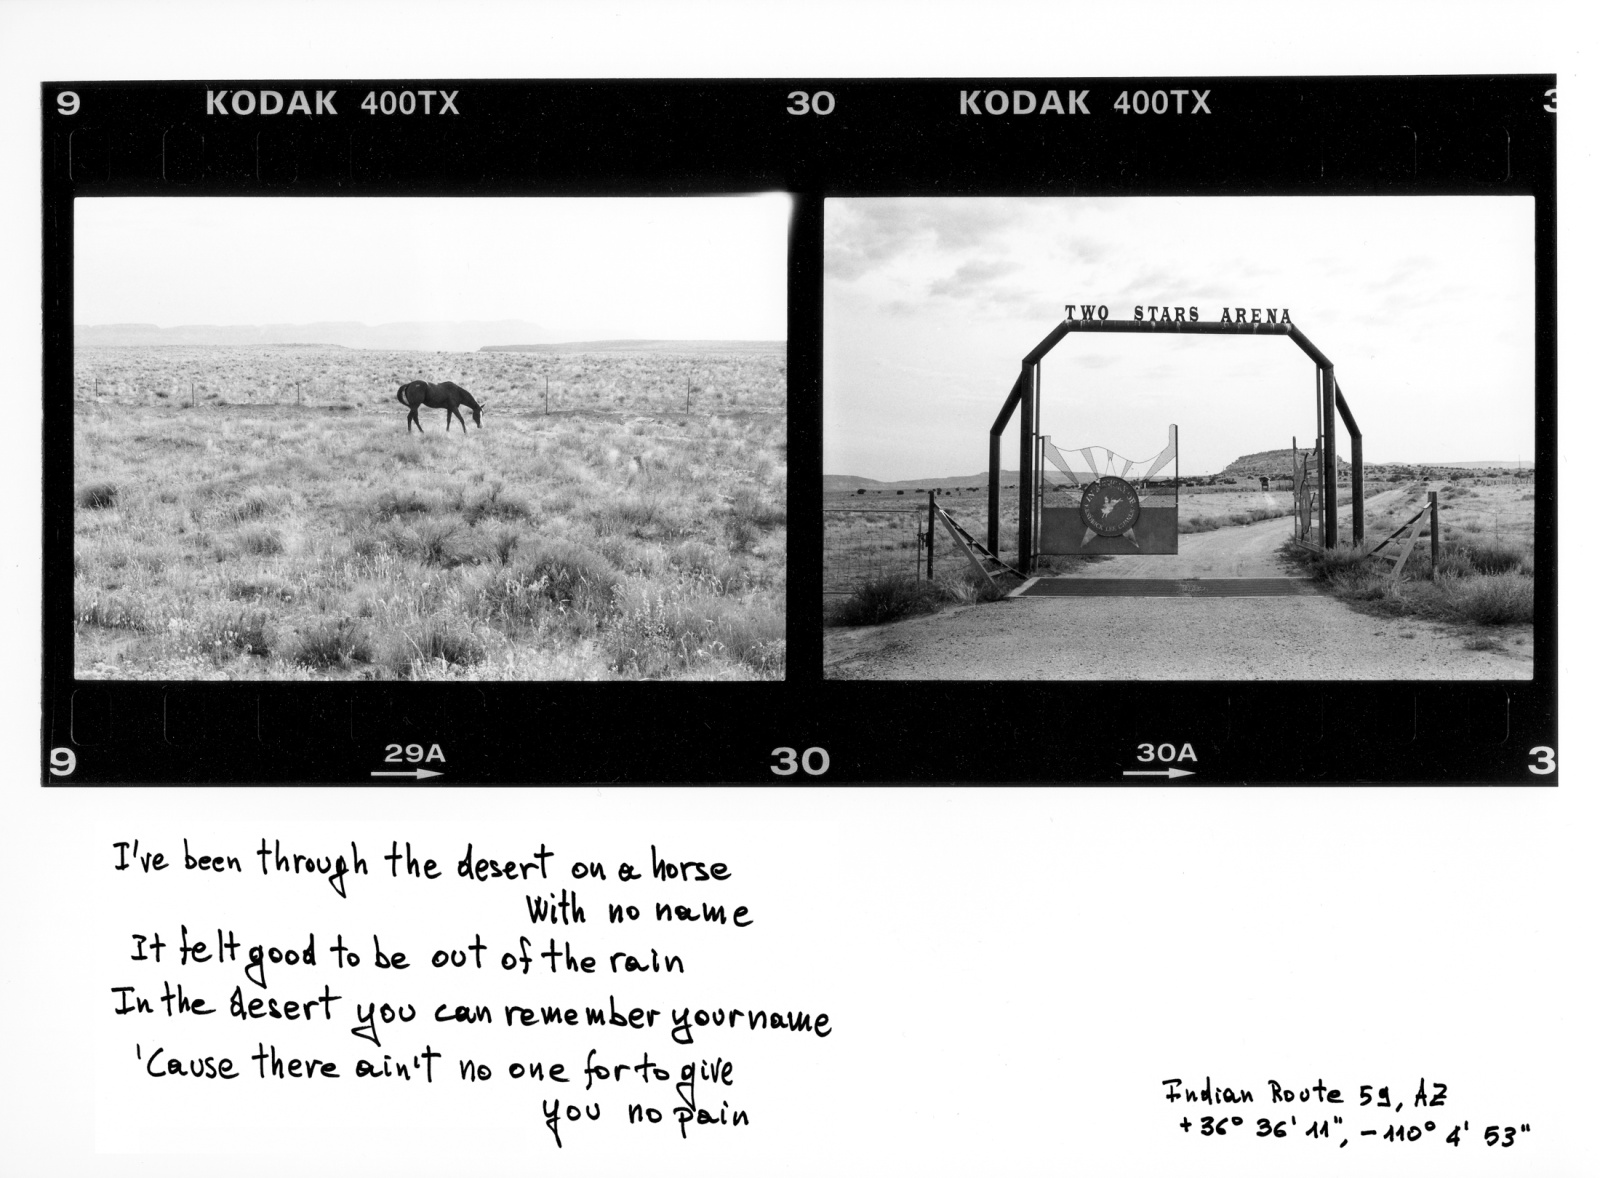 Horse with no name (Indian Route 59 near Kayenta,AZ) 2007 - (c) America